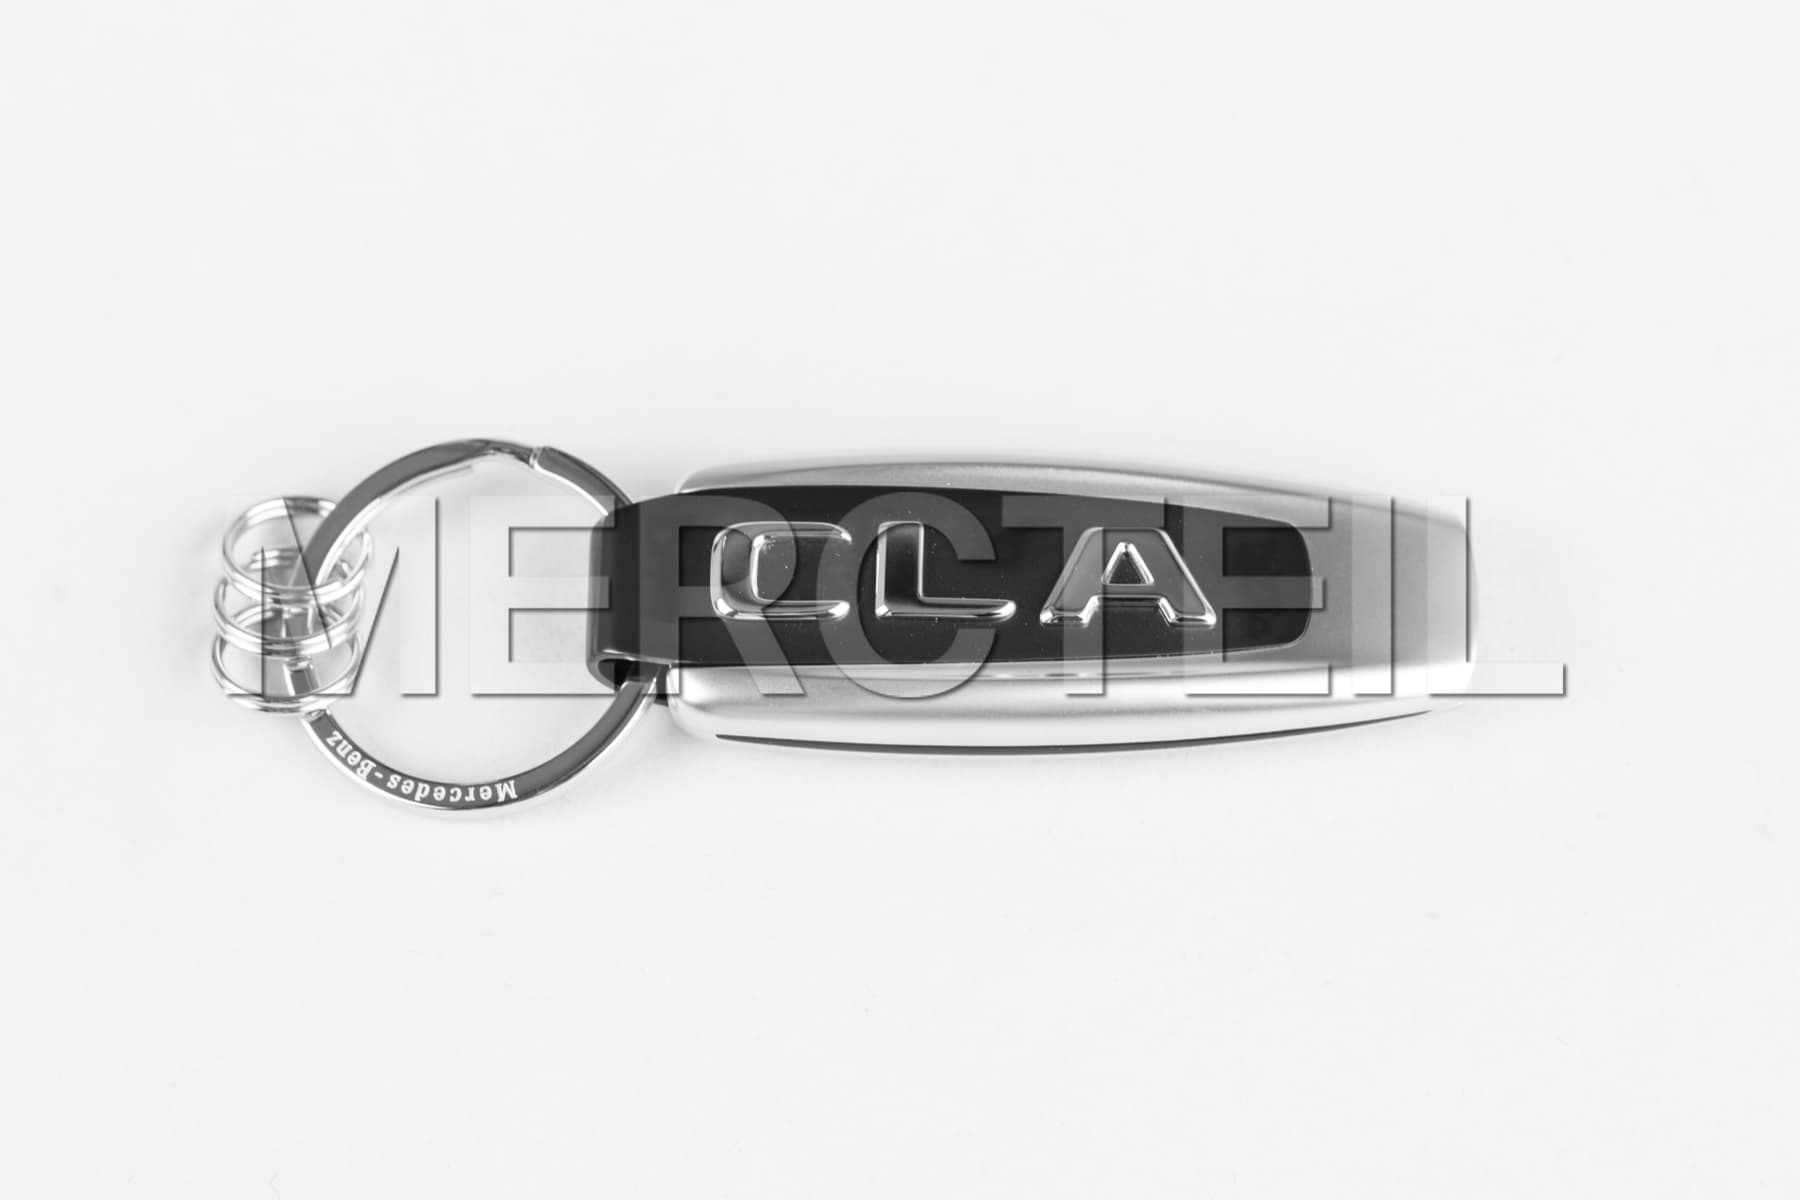 CLA Class Keyring Genuine Mercedes Benz Accessories